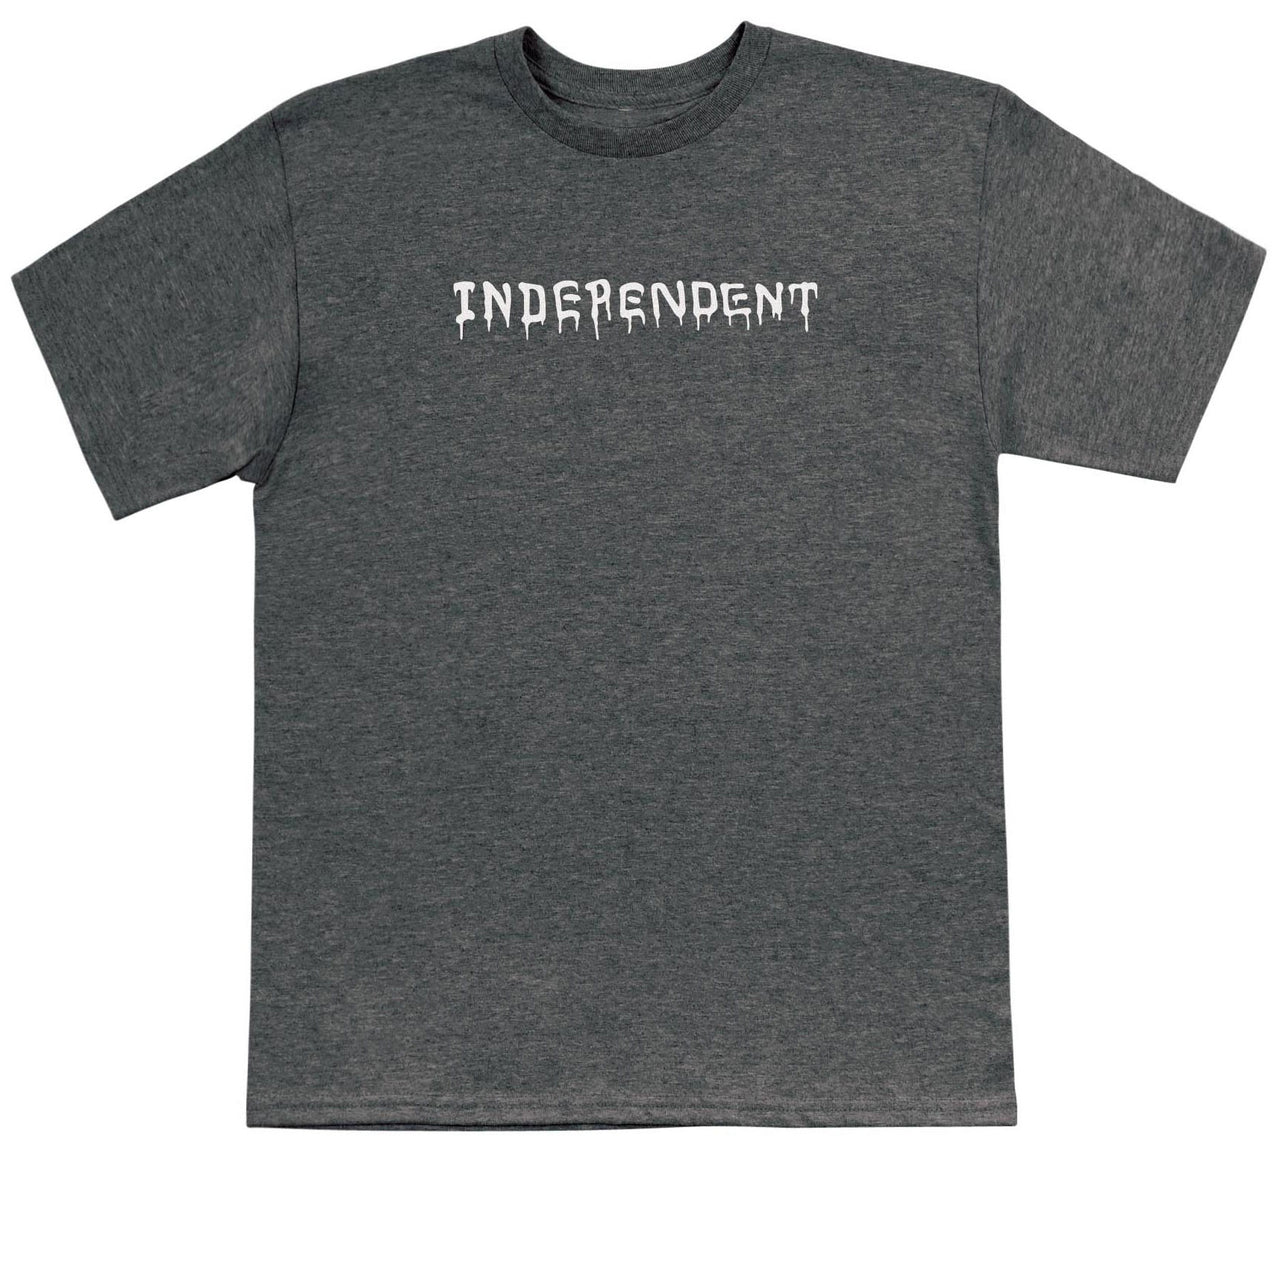 Independent Vandal T-Shirt - Dark Grey Heather image 1